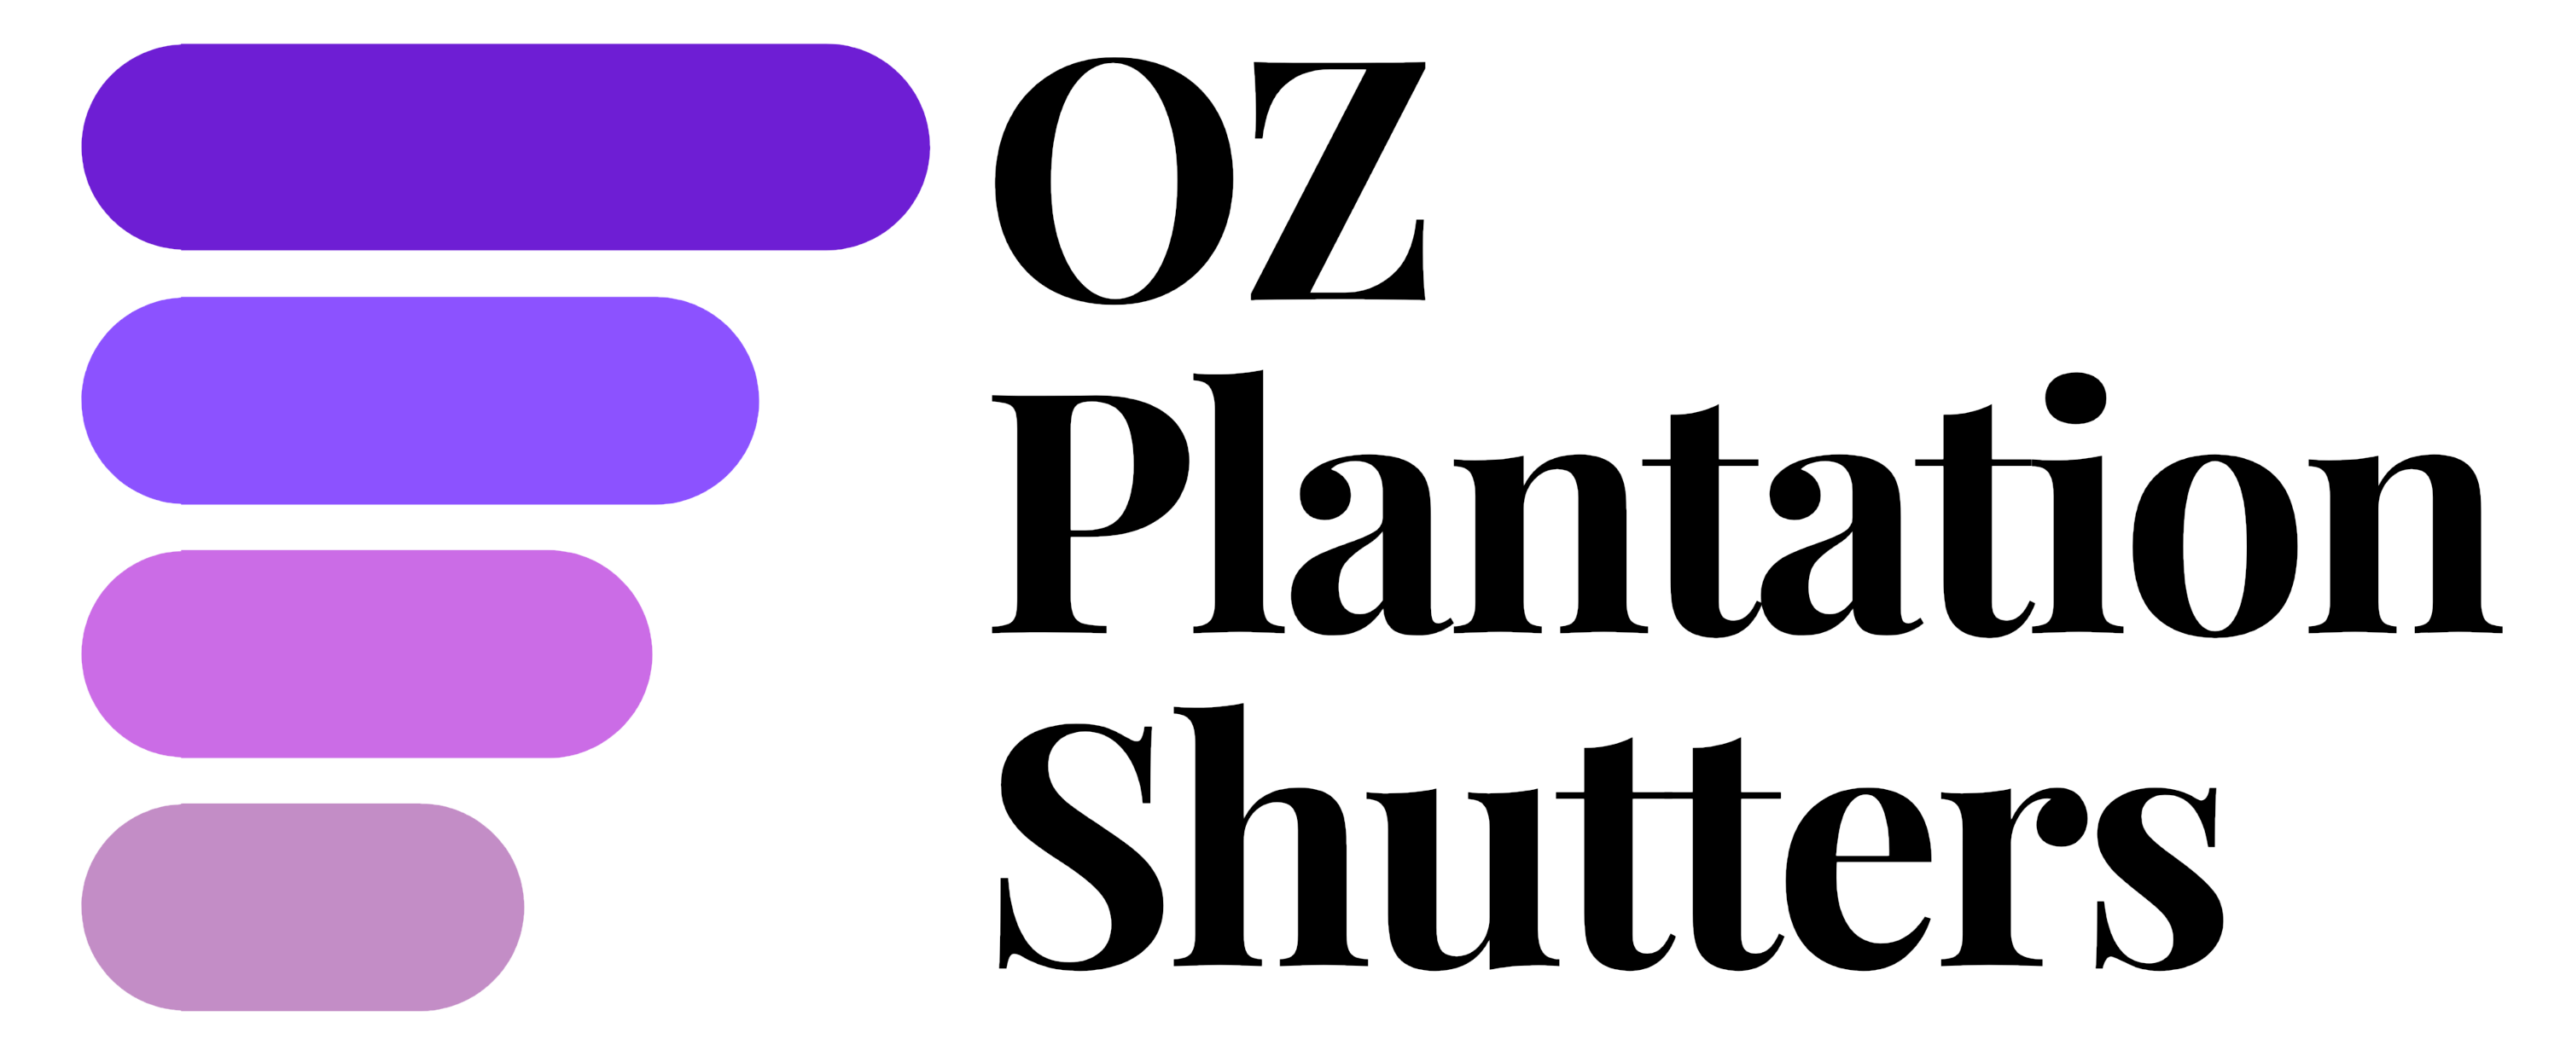 OZ Plantation Shutters